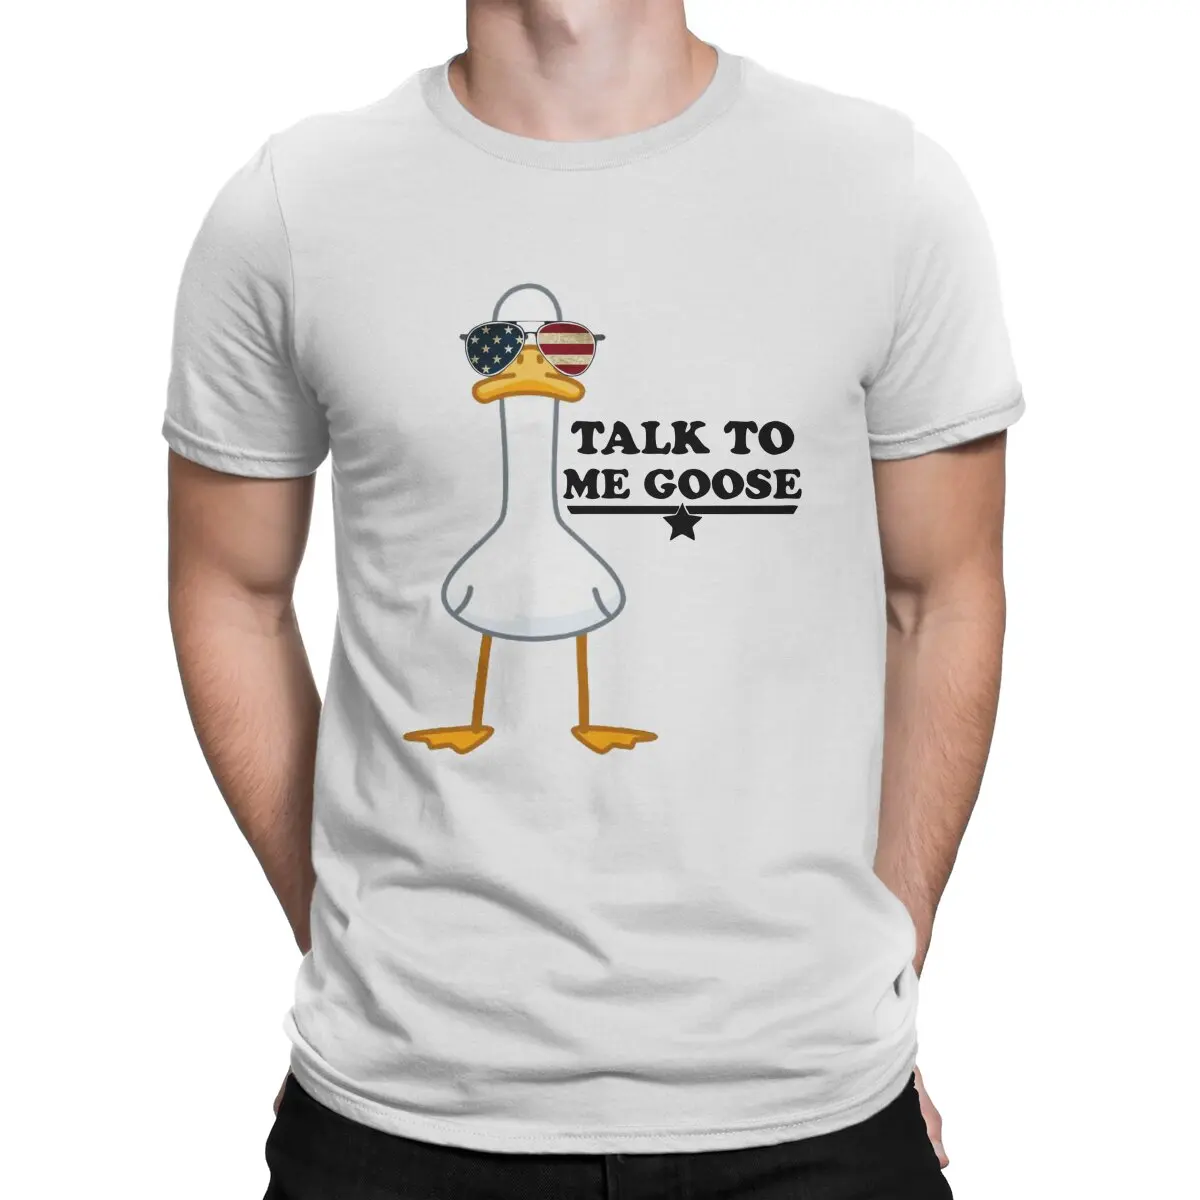 

Shades USA Funny Movie Saying Top Gun Animal Rights T-Shirt for Men Talk to Me Goose Novelty Cotton Tee Shirt Crewneck T Shirts